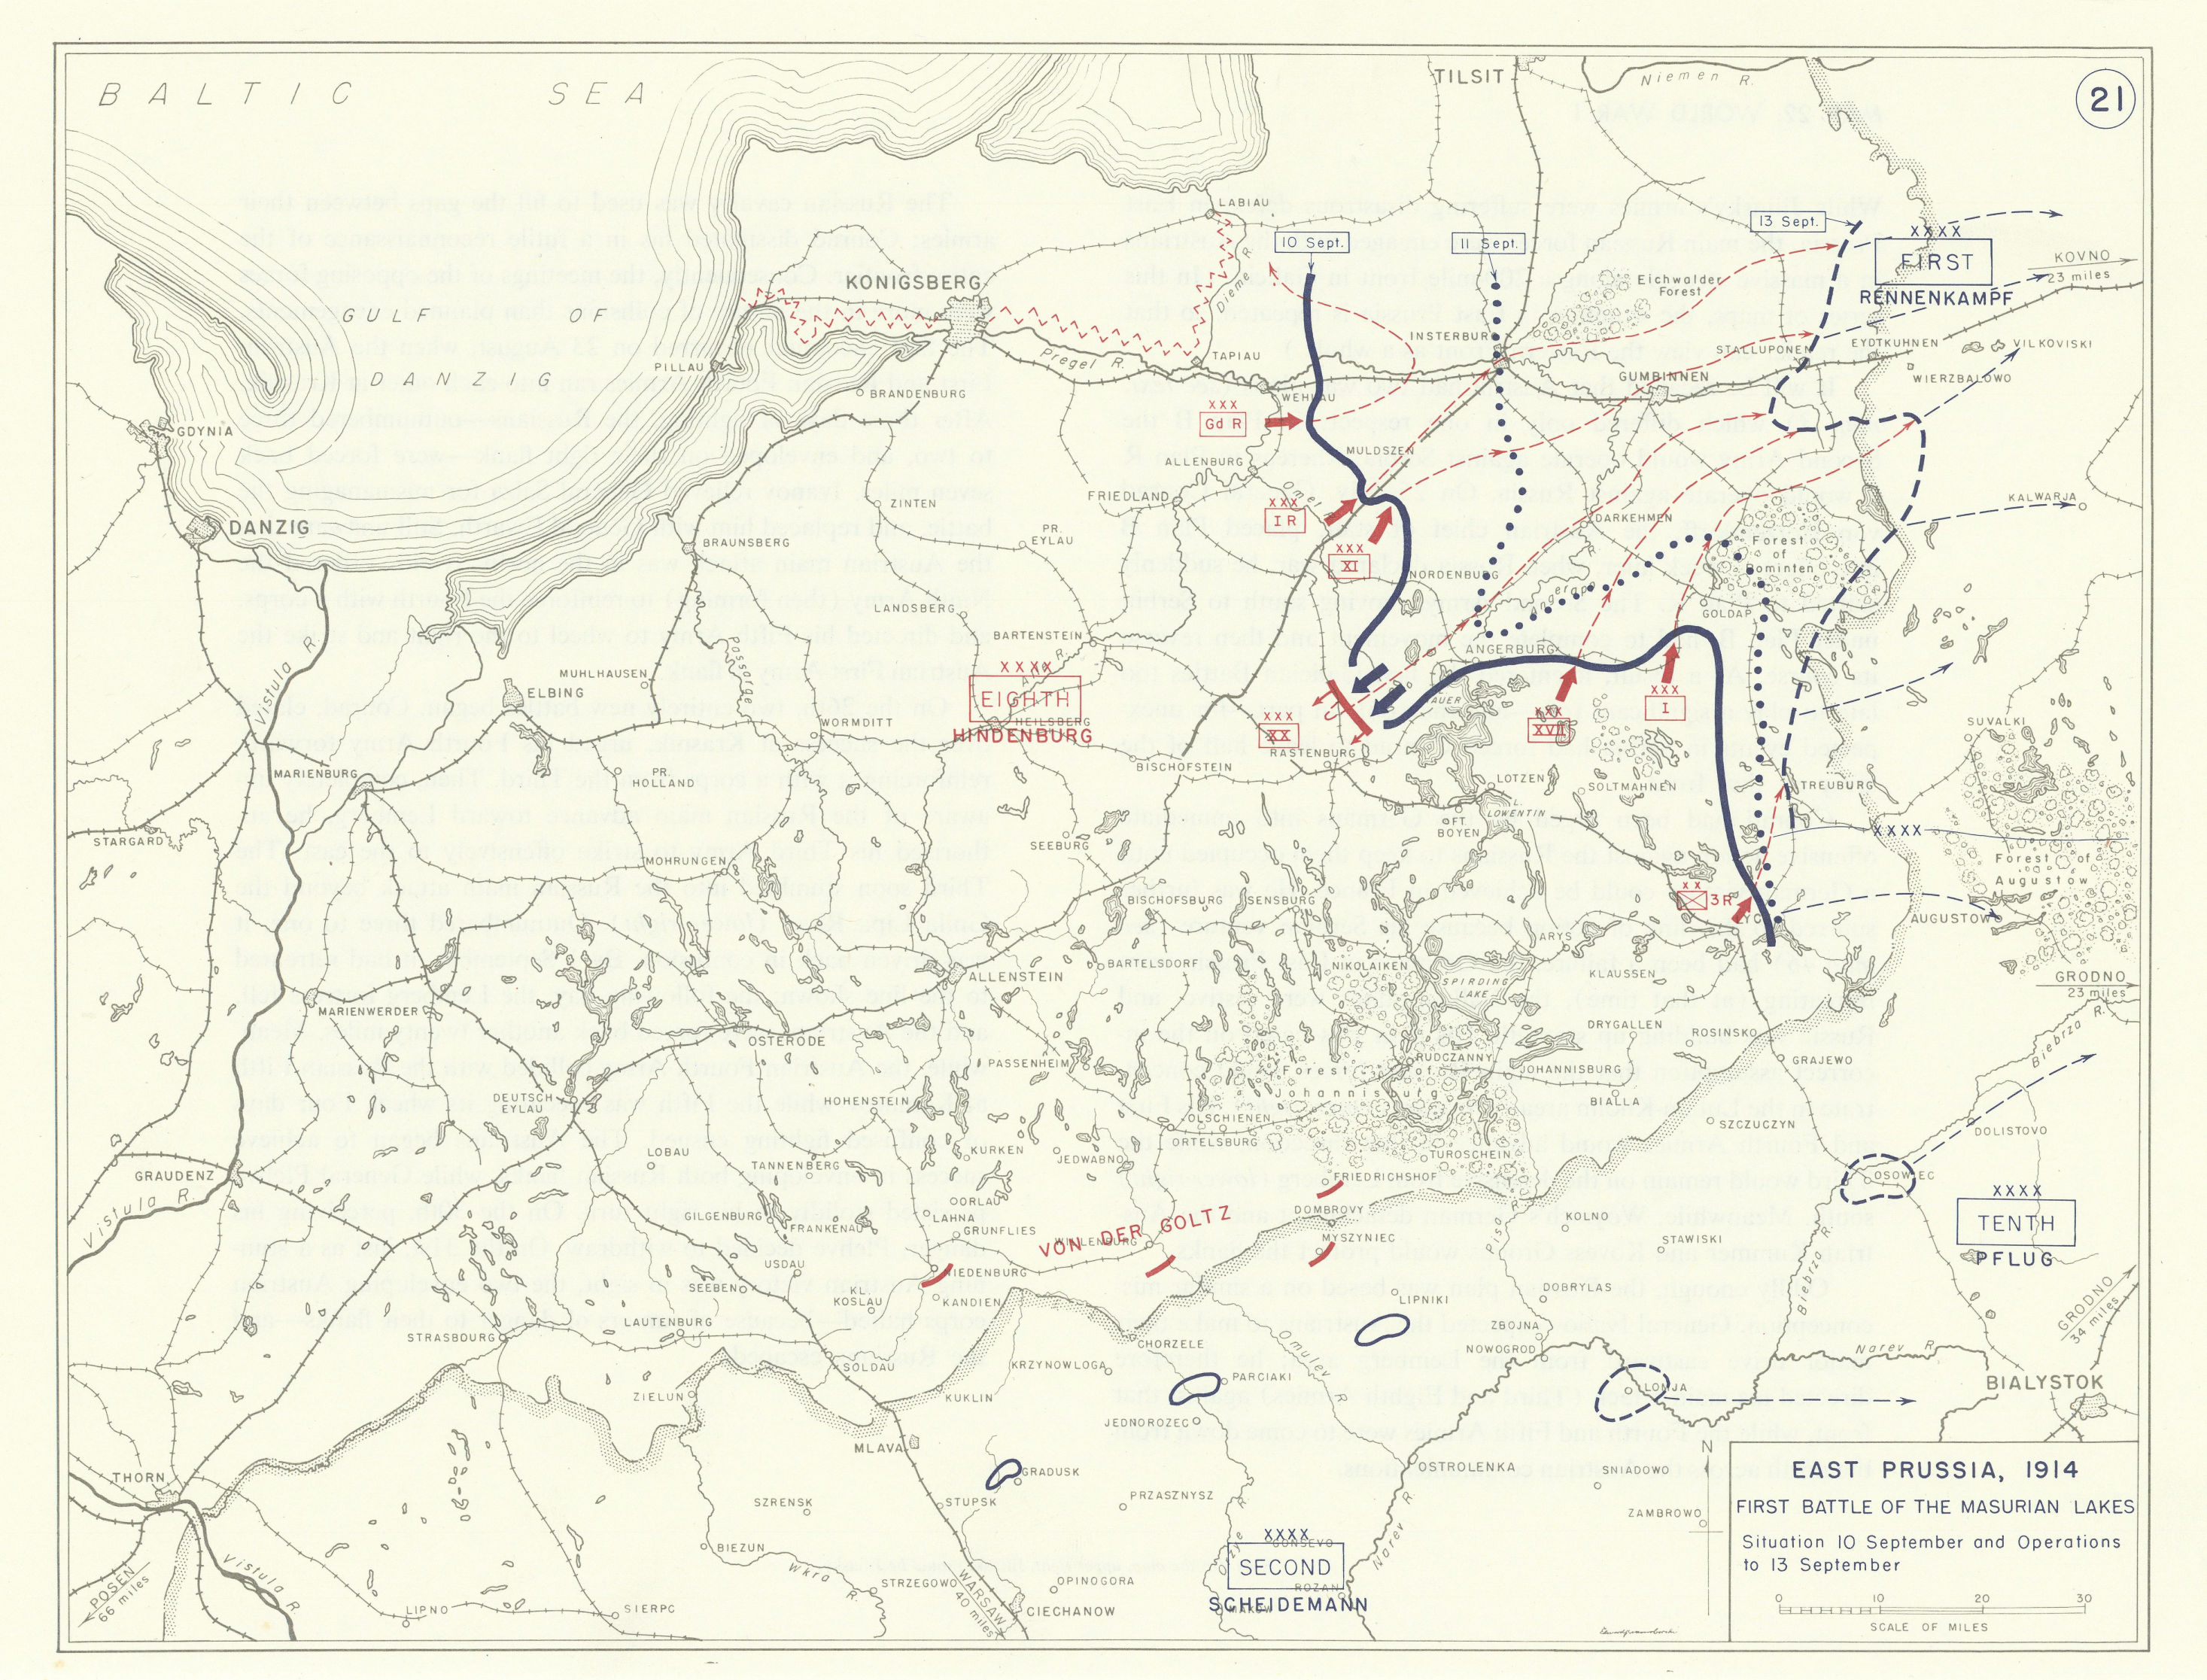 World War 1 East Prussia 10-13 September 1914 Masurian Lakes 1st Battle 1959 map